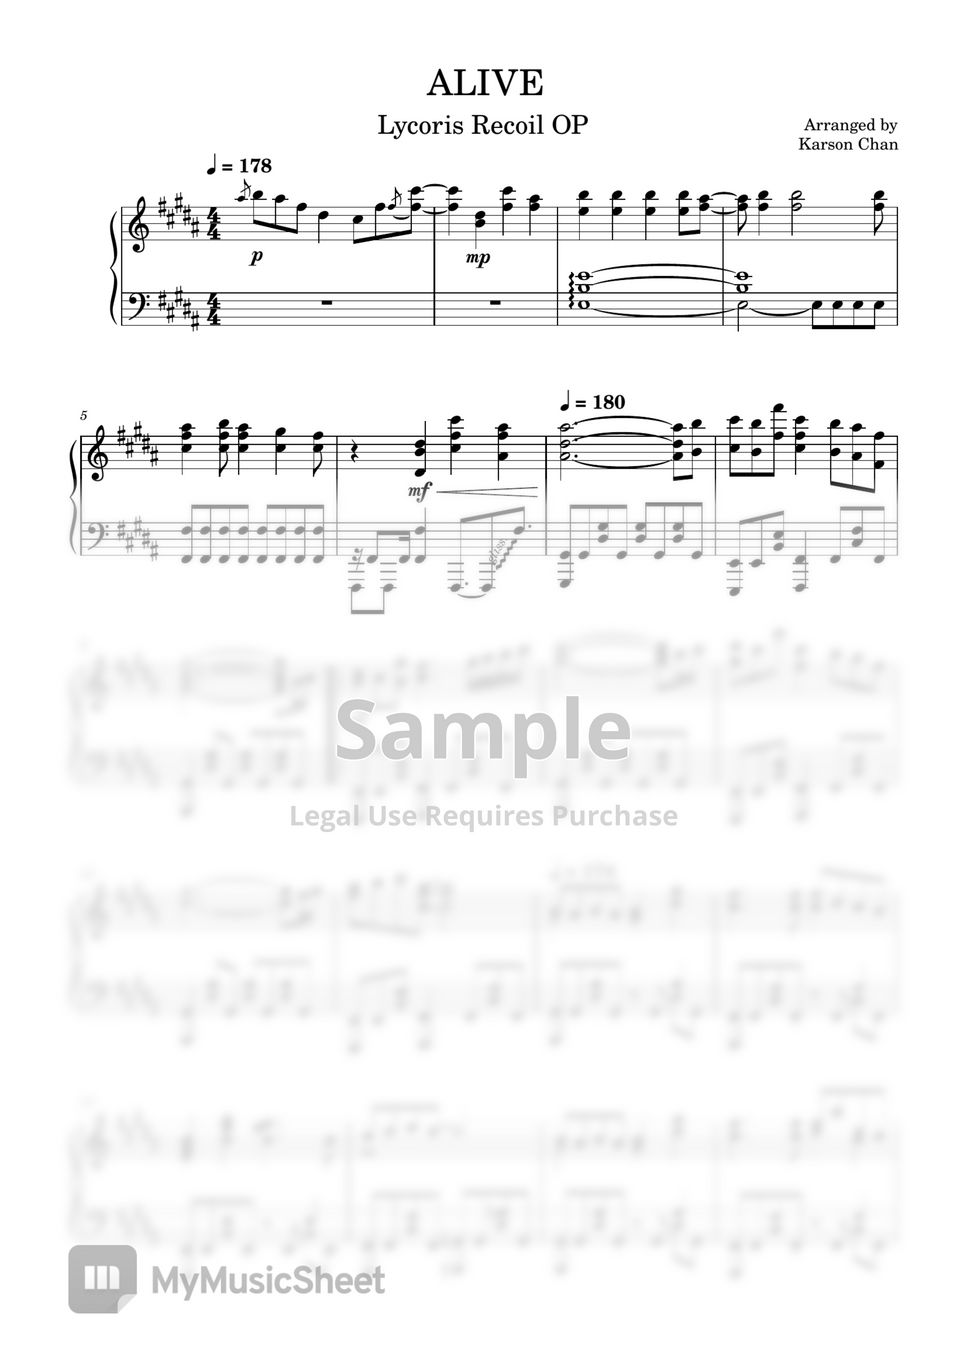 Lycoris Recoil リコリス・リコイル - ALIVE Full Version (Lycoris Recoil リコリス・リコイル OP) --WITH MIDI+MusicXML+WAV+Musescore Tutorial by Karson Chan